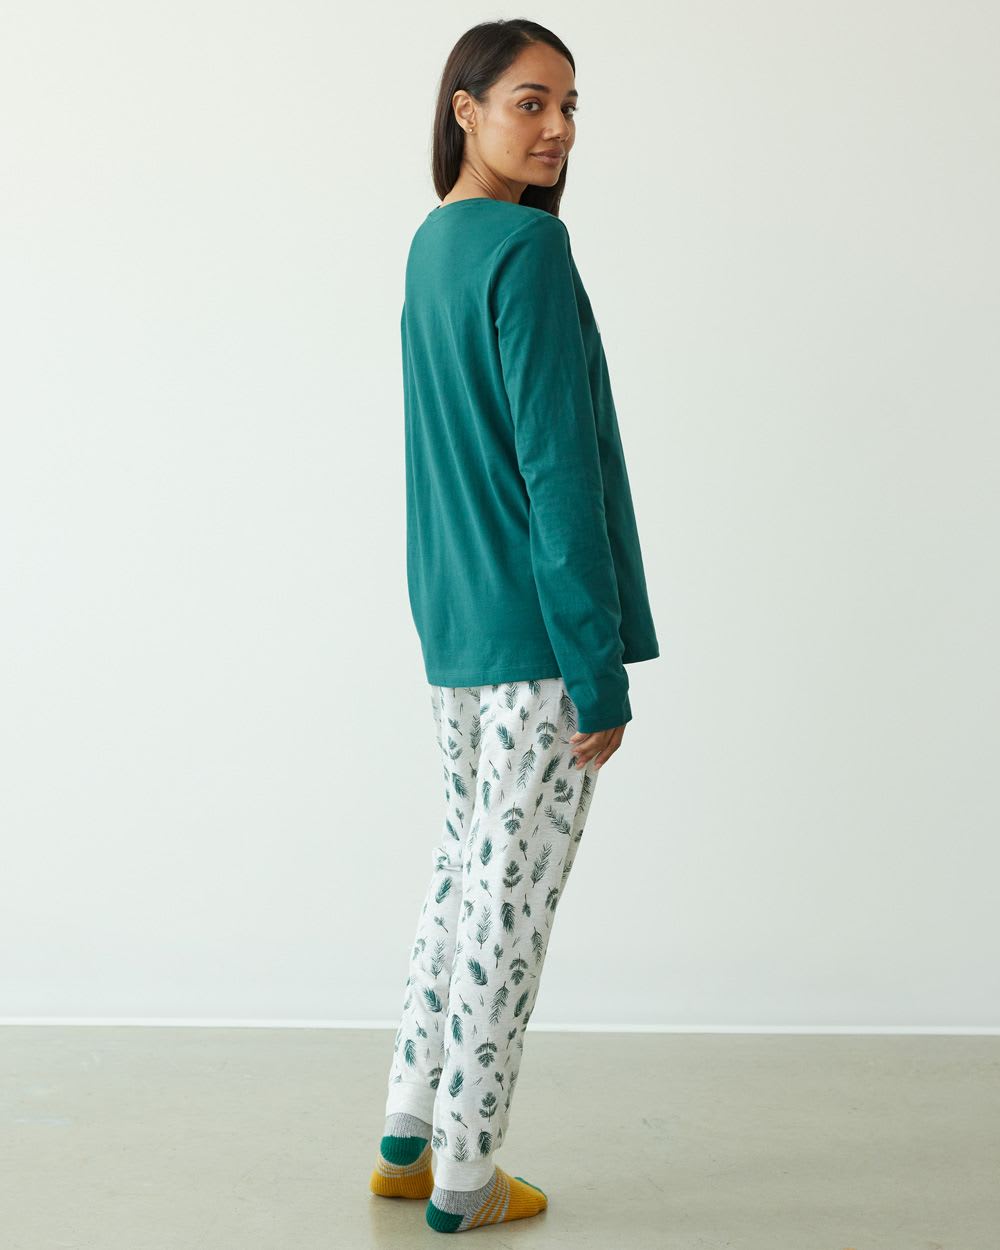 TOP-VIGOR Silky Satin Pajama Set for Women Long Sleeve Button Down Soft Sleepwear  Nightwear Pj Sets : : Clothing, Shoes & Accessories